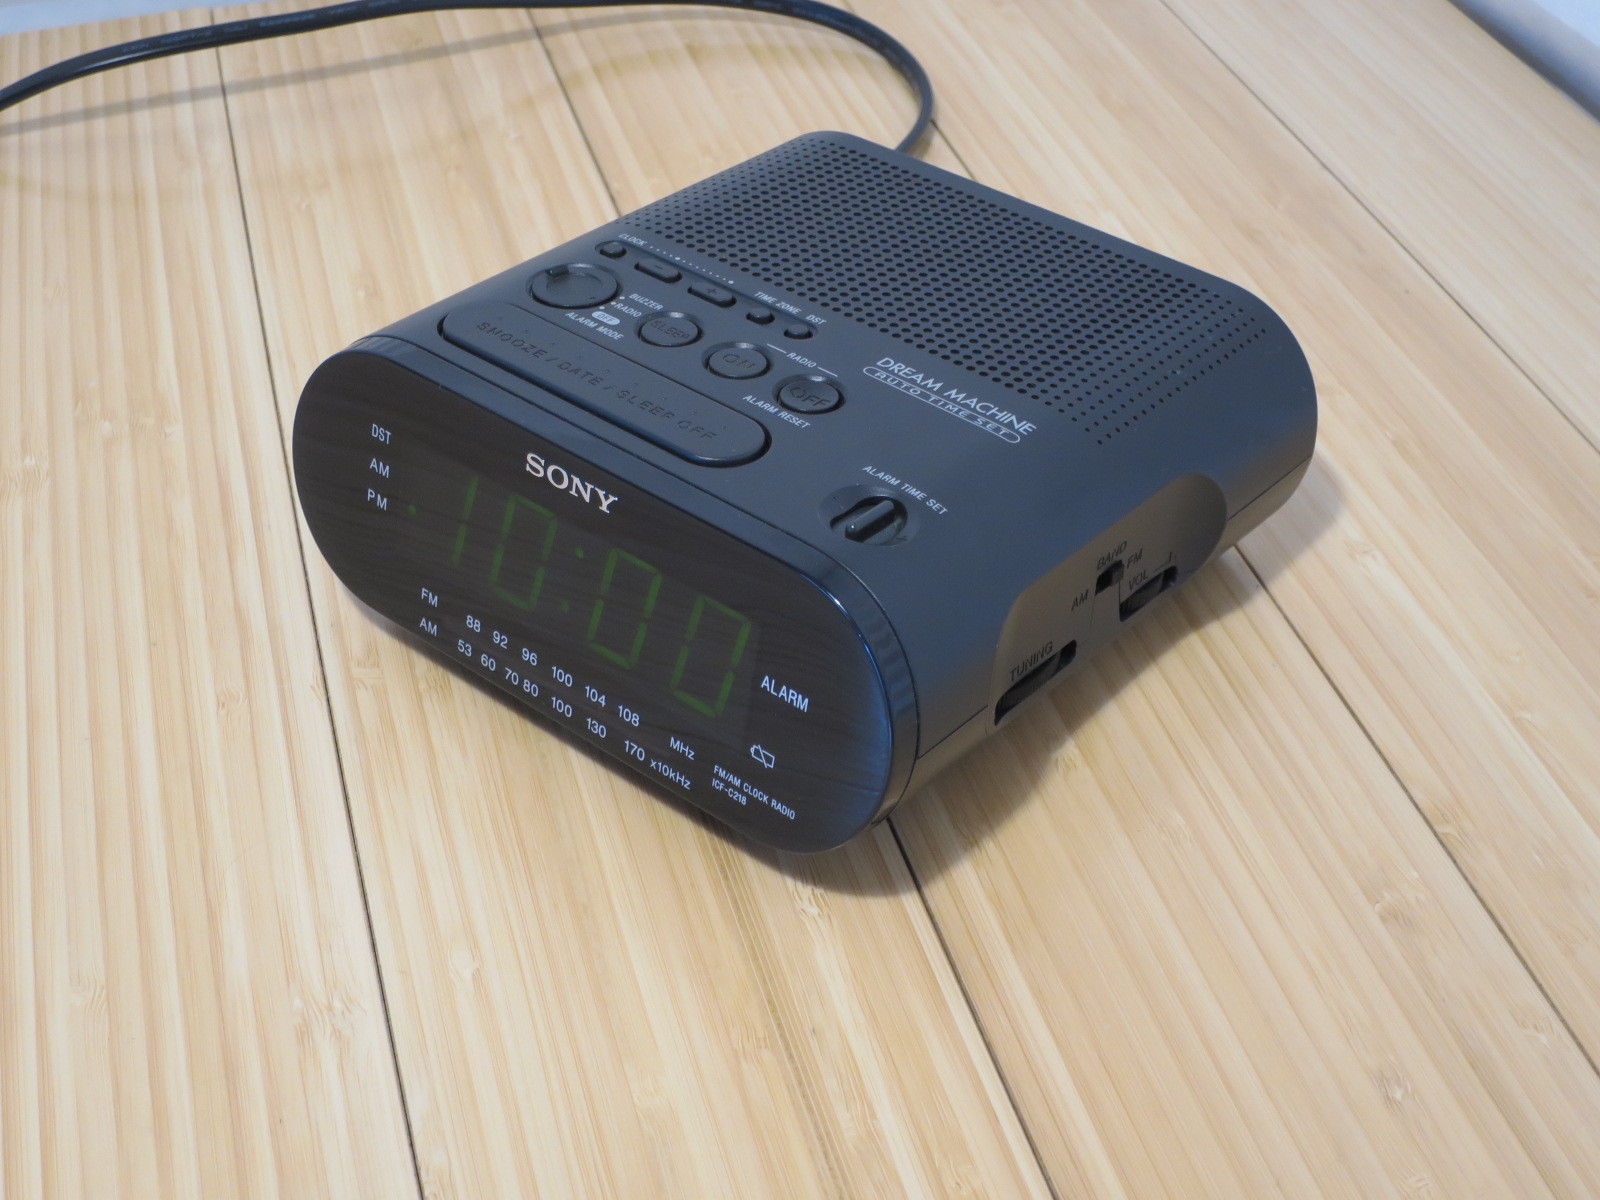 Model ICF-C218 Sony Dream Machine FM/AM Alarm Clock Radio 